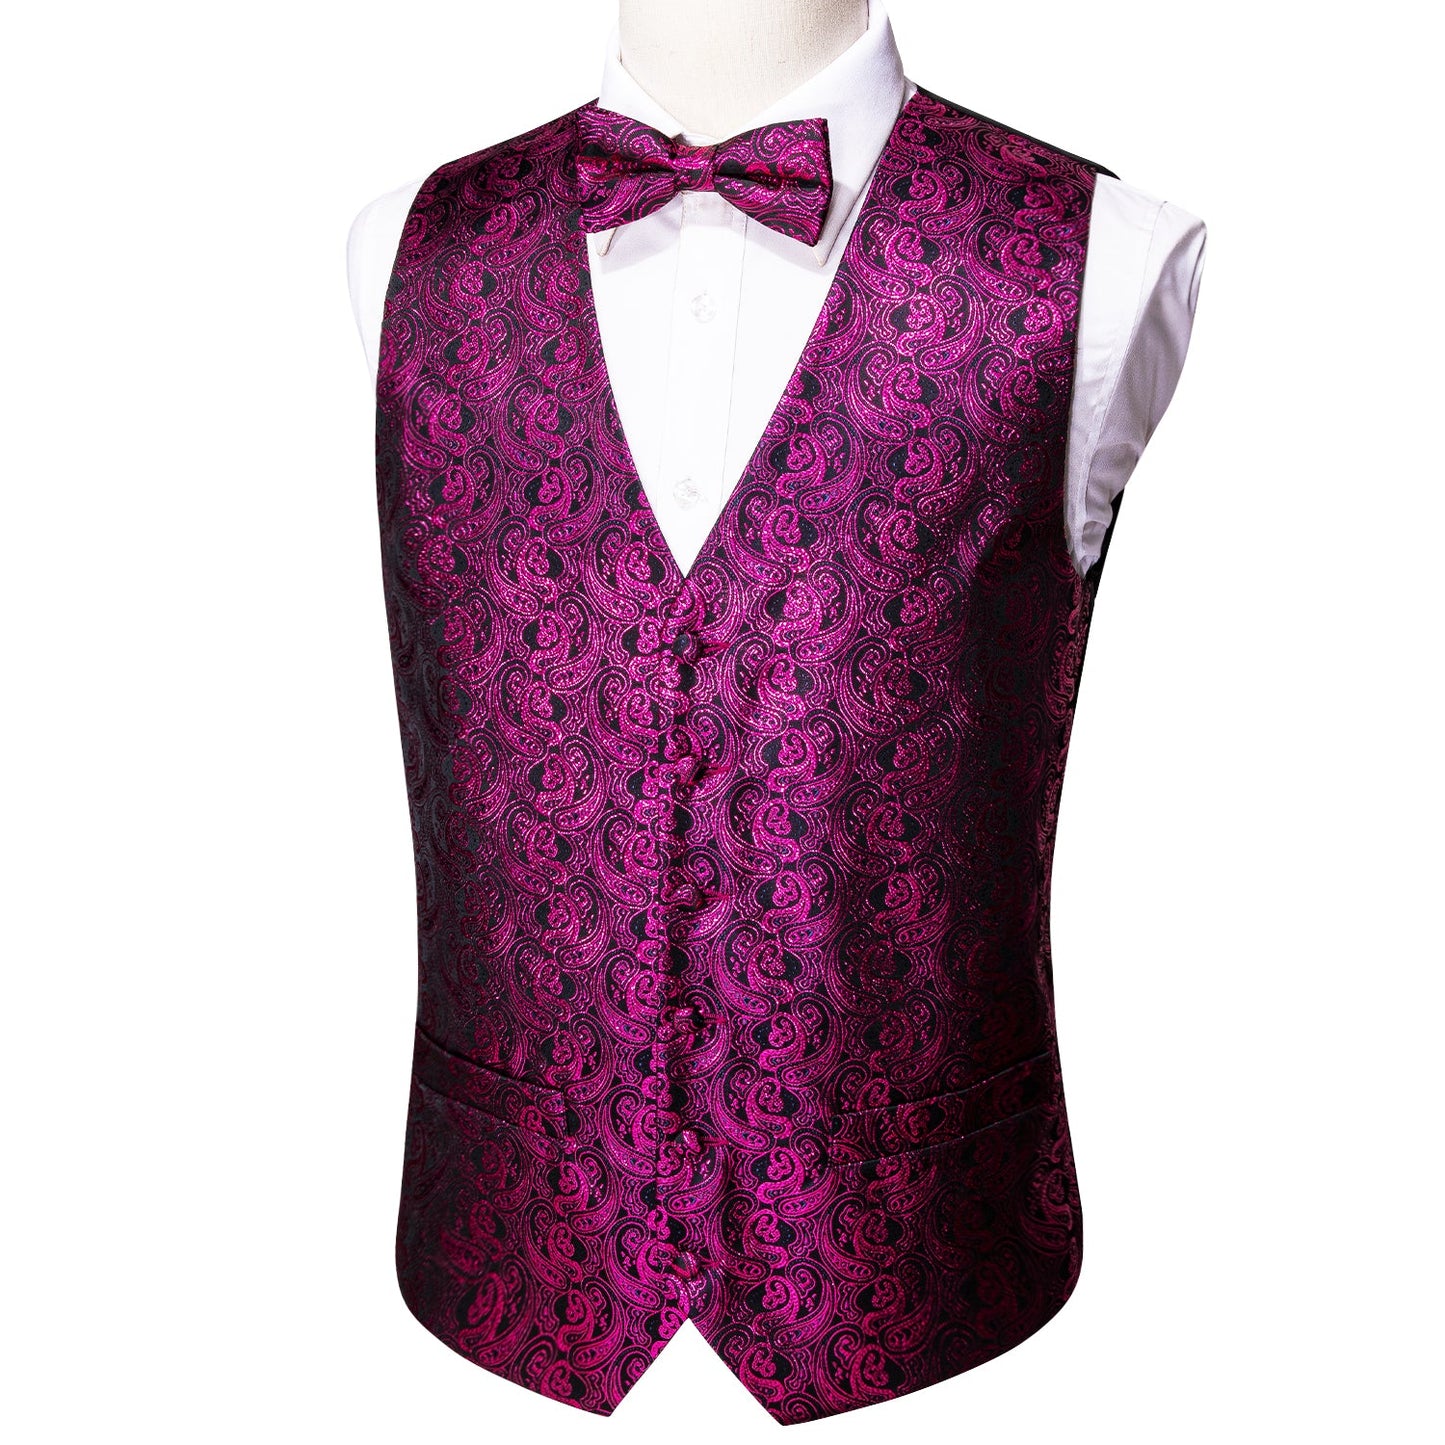 Designer Silky Waistcoat Shiny Novelty Vest Bowtie Mini Paisley Plum